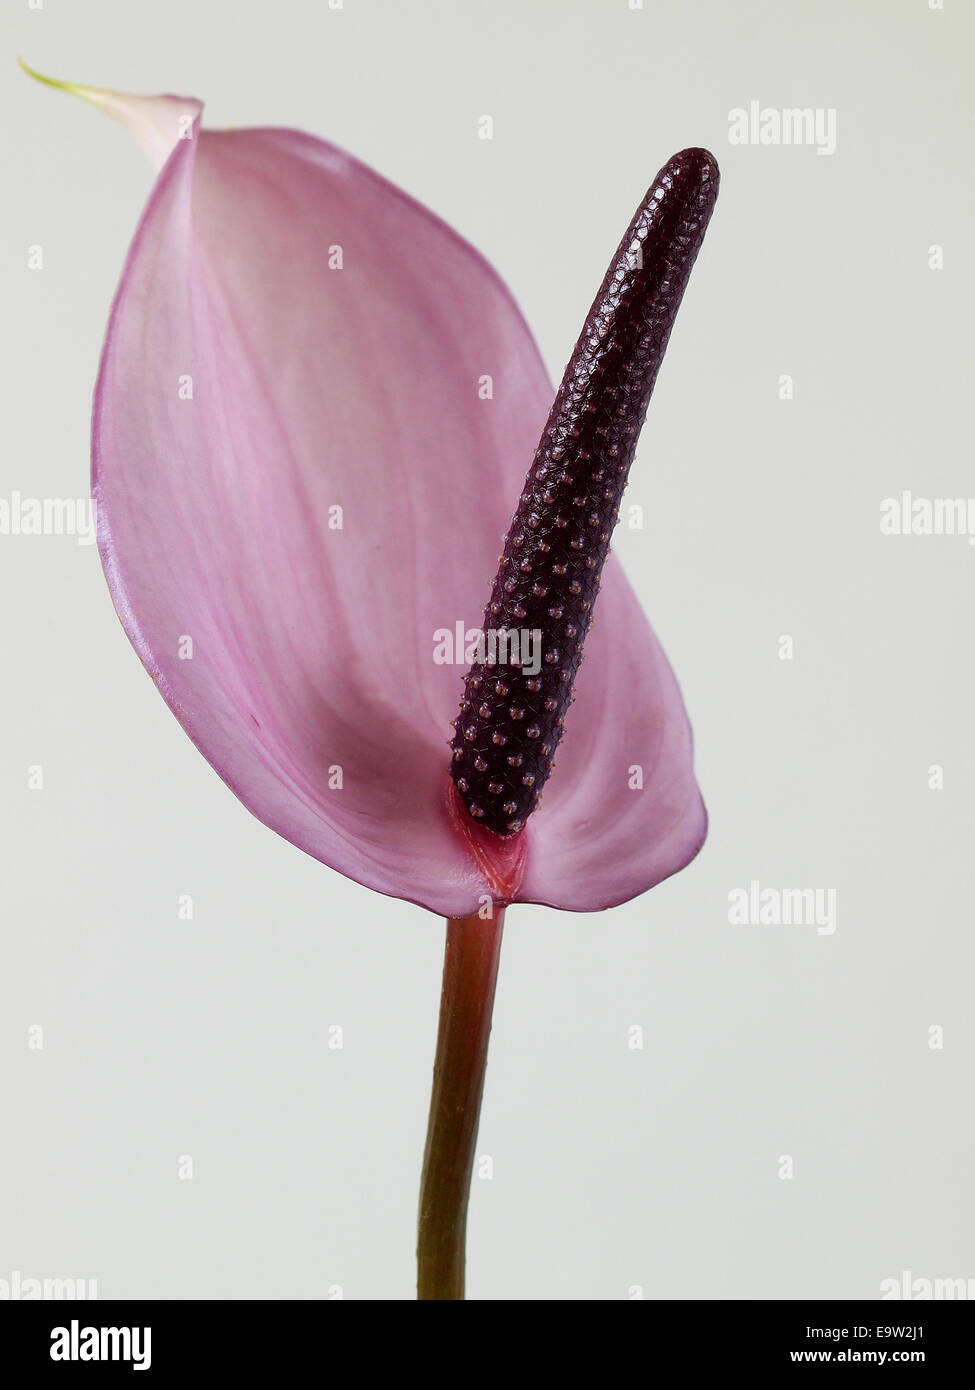 Violet anthurium flower Stock Photo